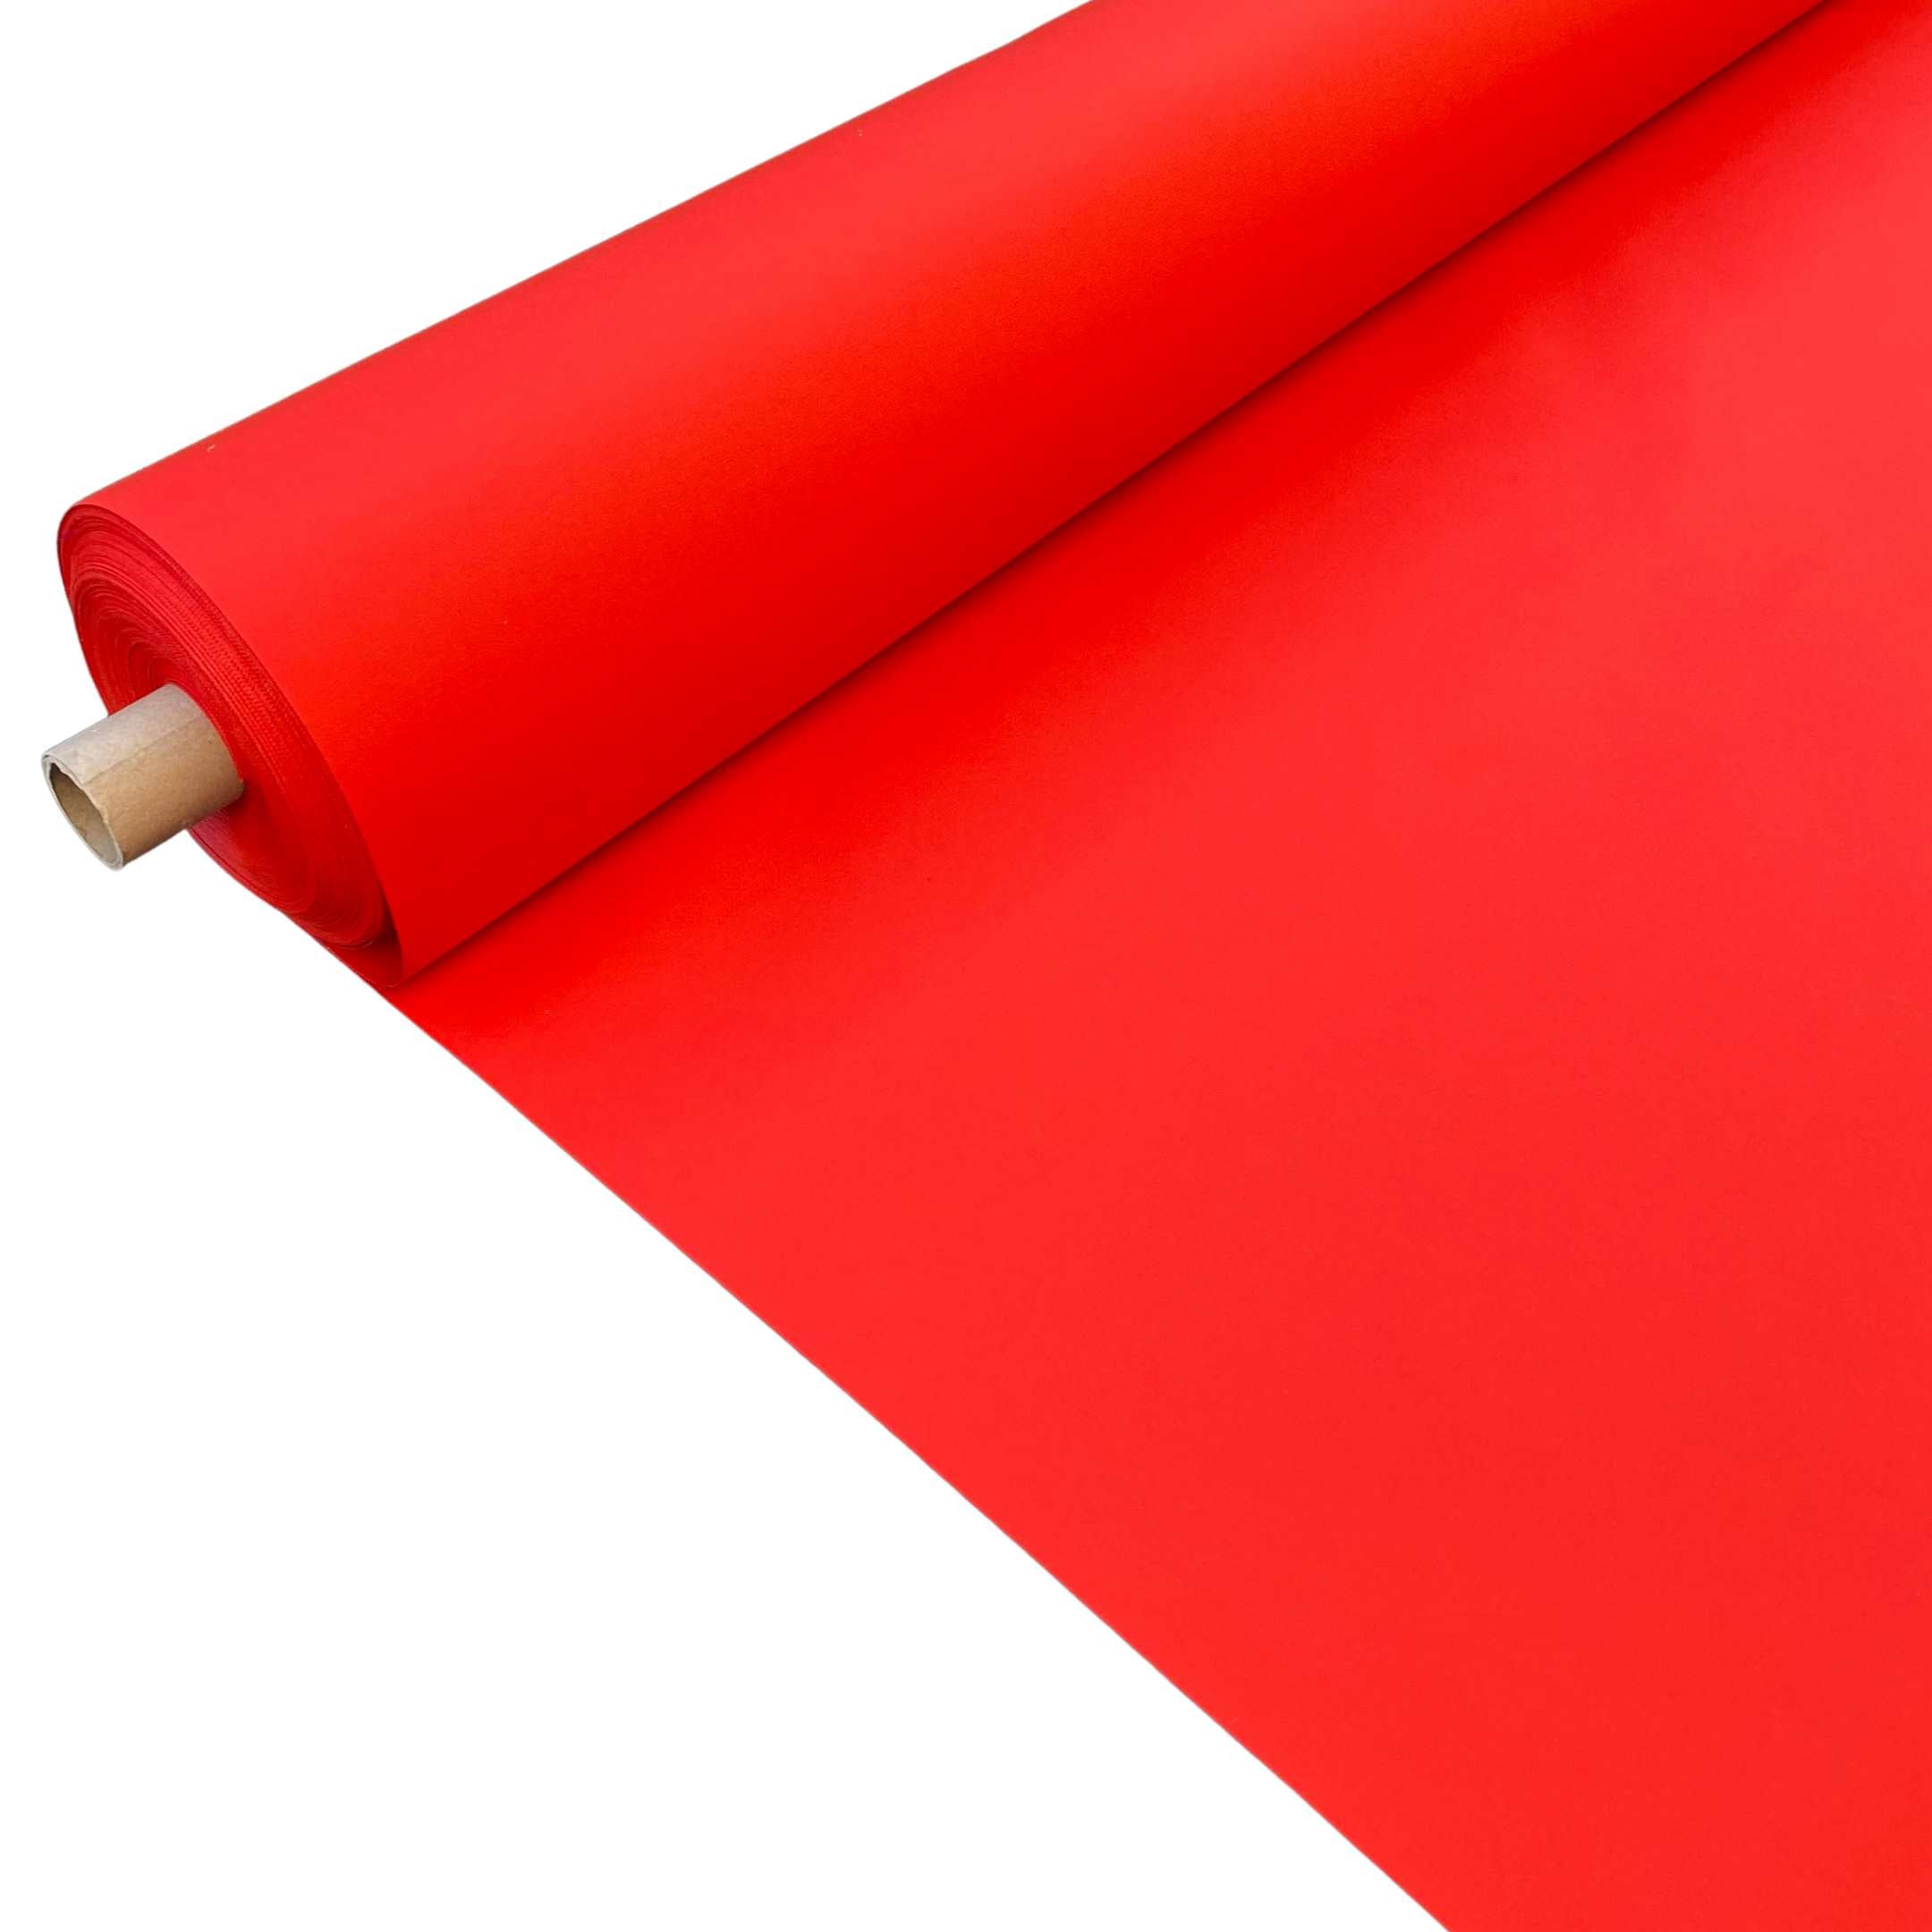 Sunbrella Red Upholstery fabric